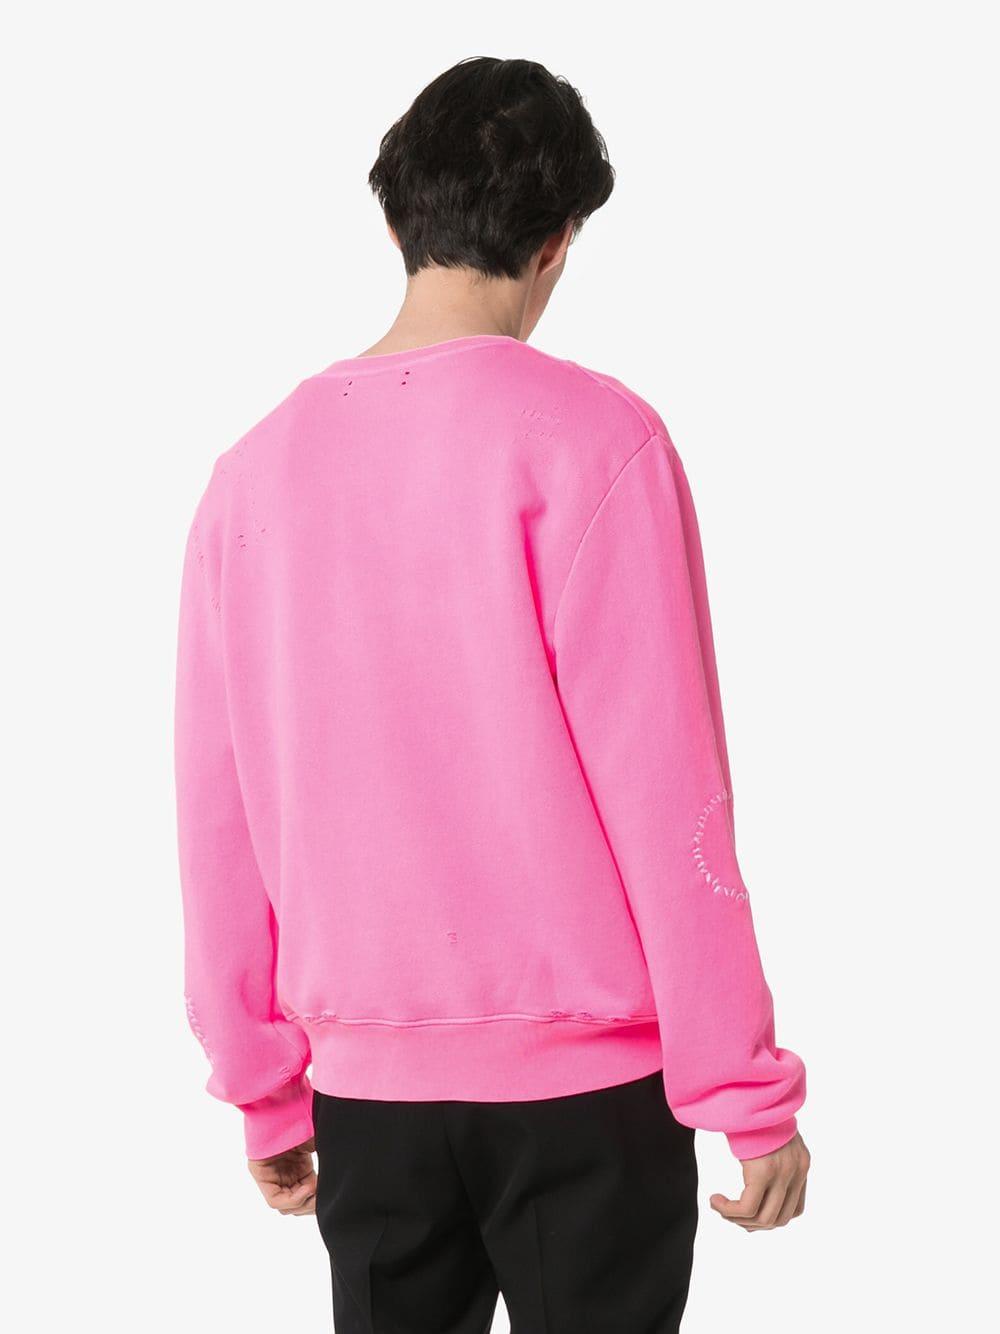 Amiri Graphic Logo Print Cotton Jumper in Pink for Men - Lyst